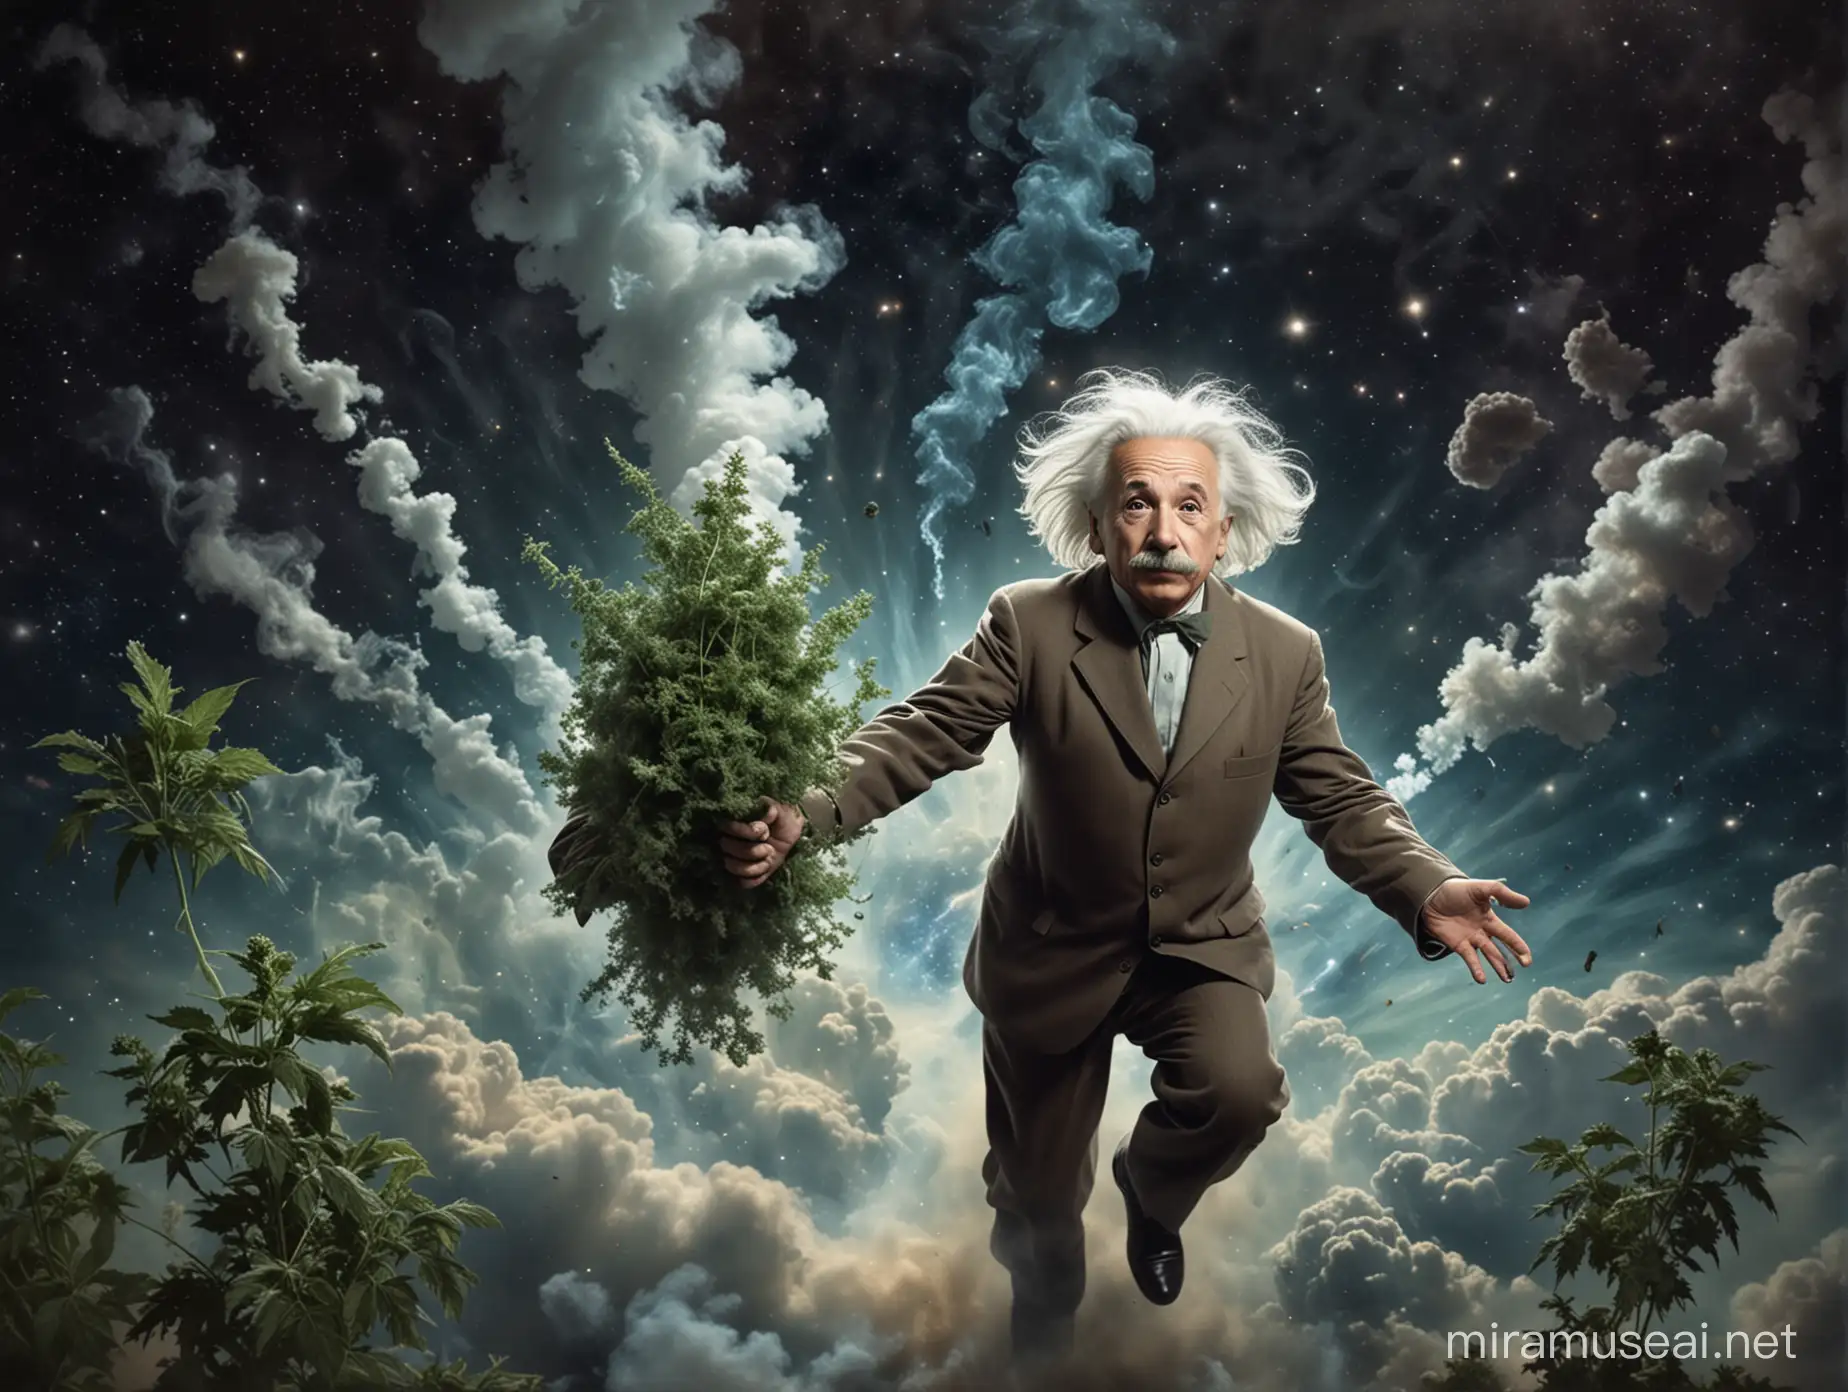 Einstein Levitating in Cosmic Serenity Amidst Nebula and Cannabis Smoke